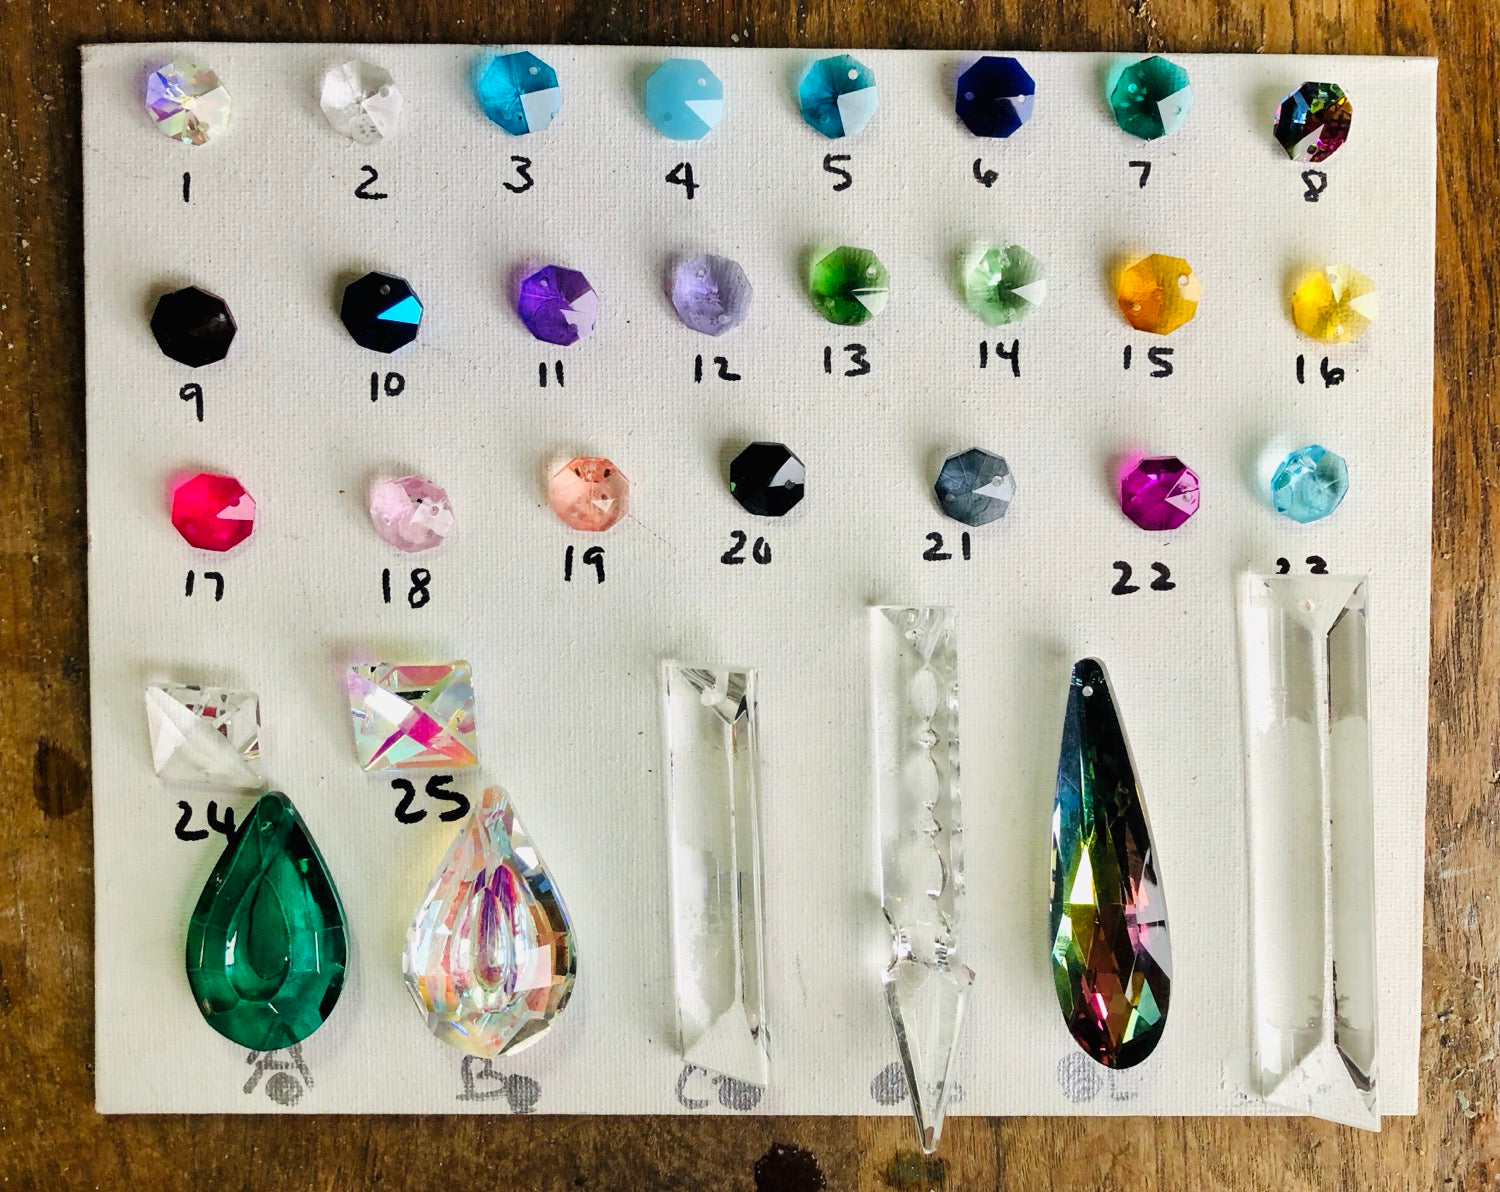 chandelier crystal options at dazzling driftwood Auburndale Florida